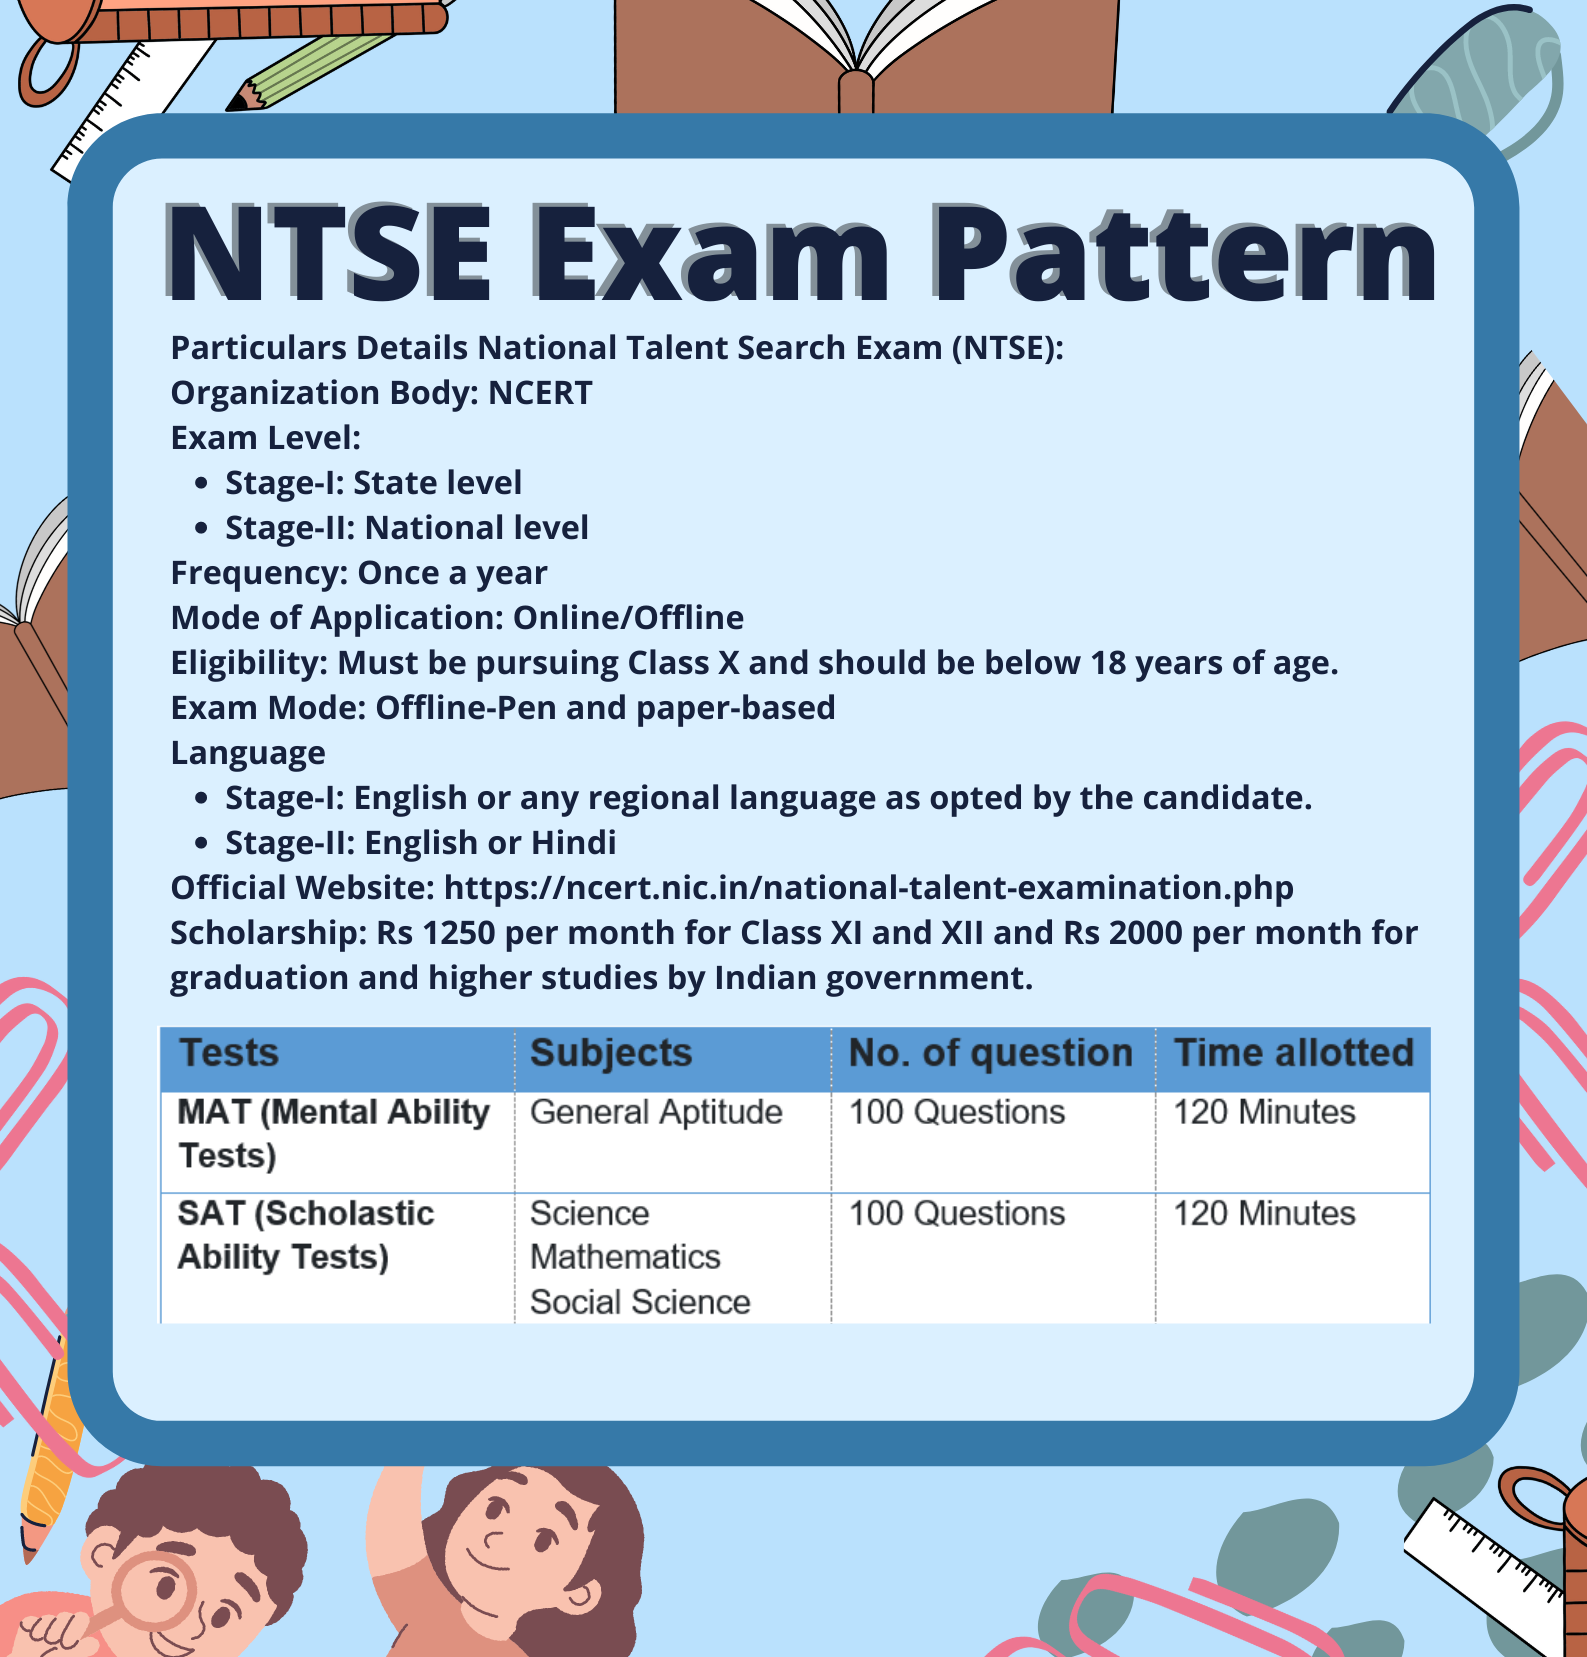 NTSE details/Pattern